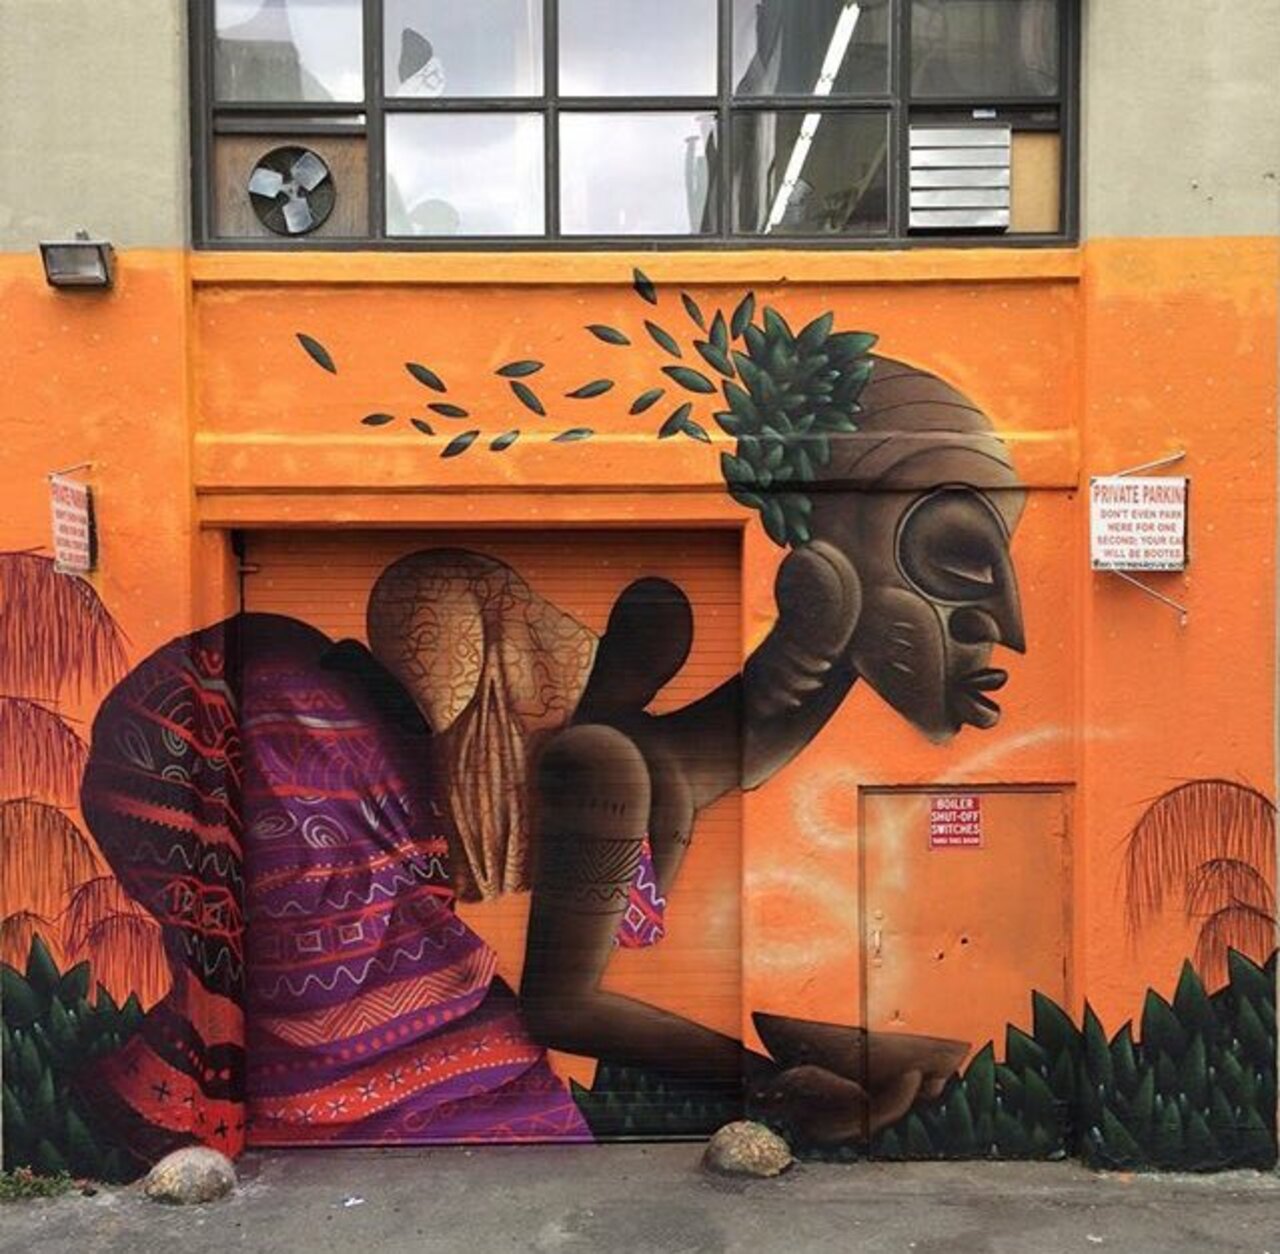 RT @Nixonbobfly: New Street Art by Alexandre Keto in NYC 

#art #graffiti #mural #streetart https://t.co/9hJPCvJtJl